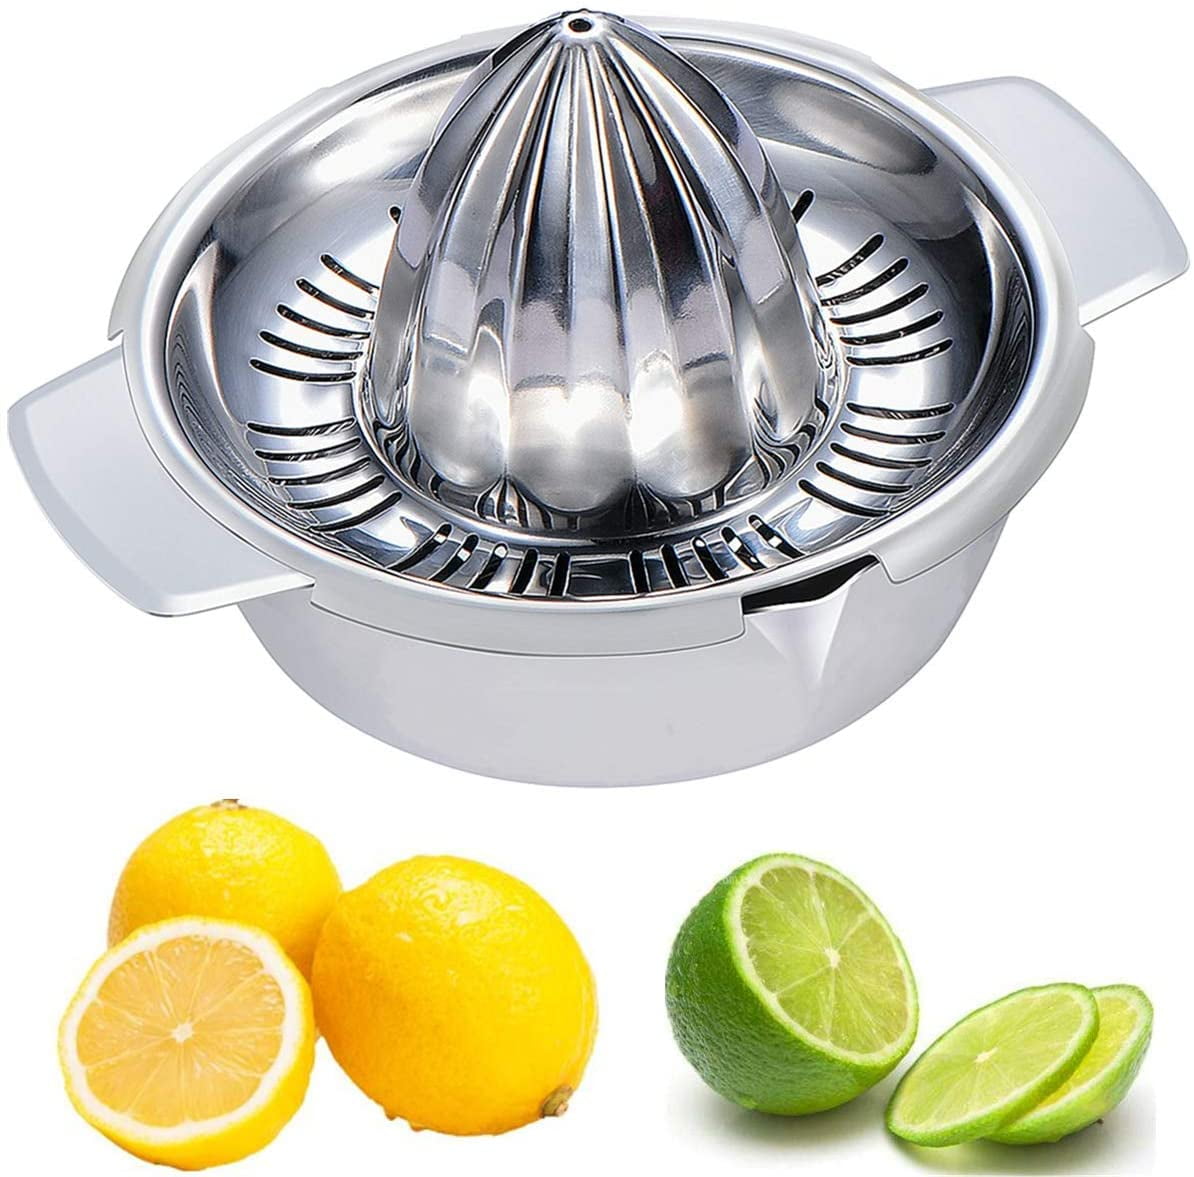 Multifunction Manual Orange Juicer Citrus Press Lime Clamp Lemon Squeezer Tool 